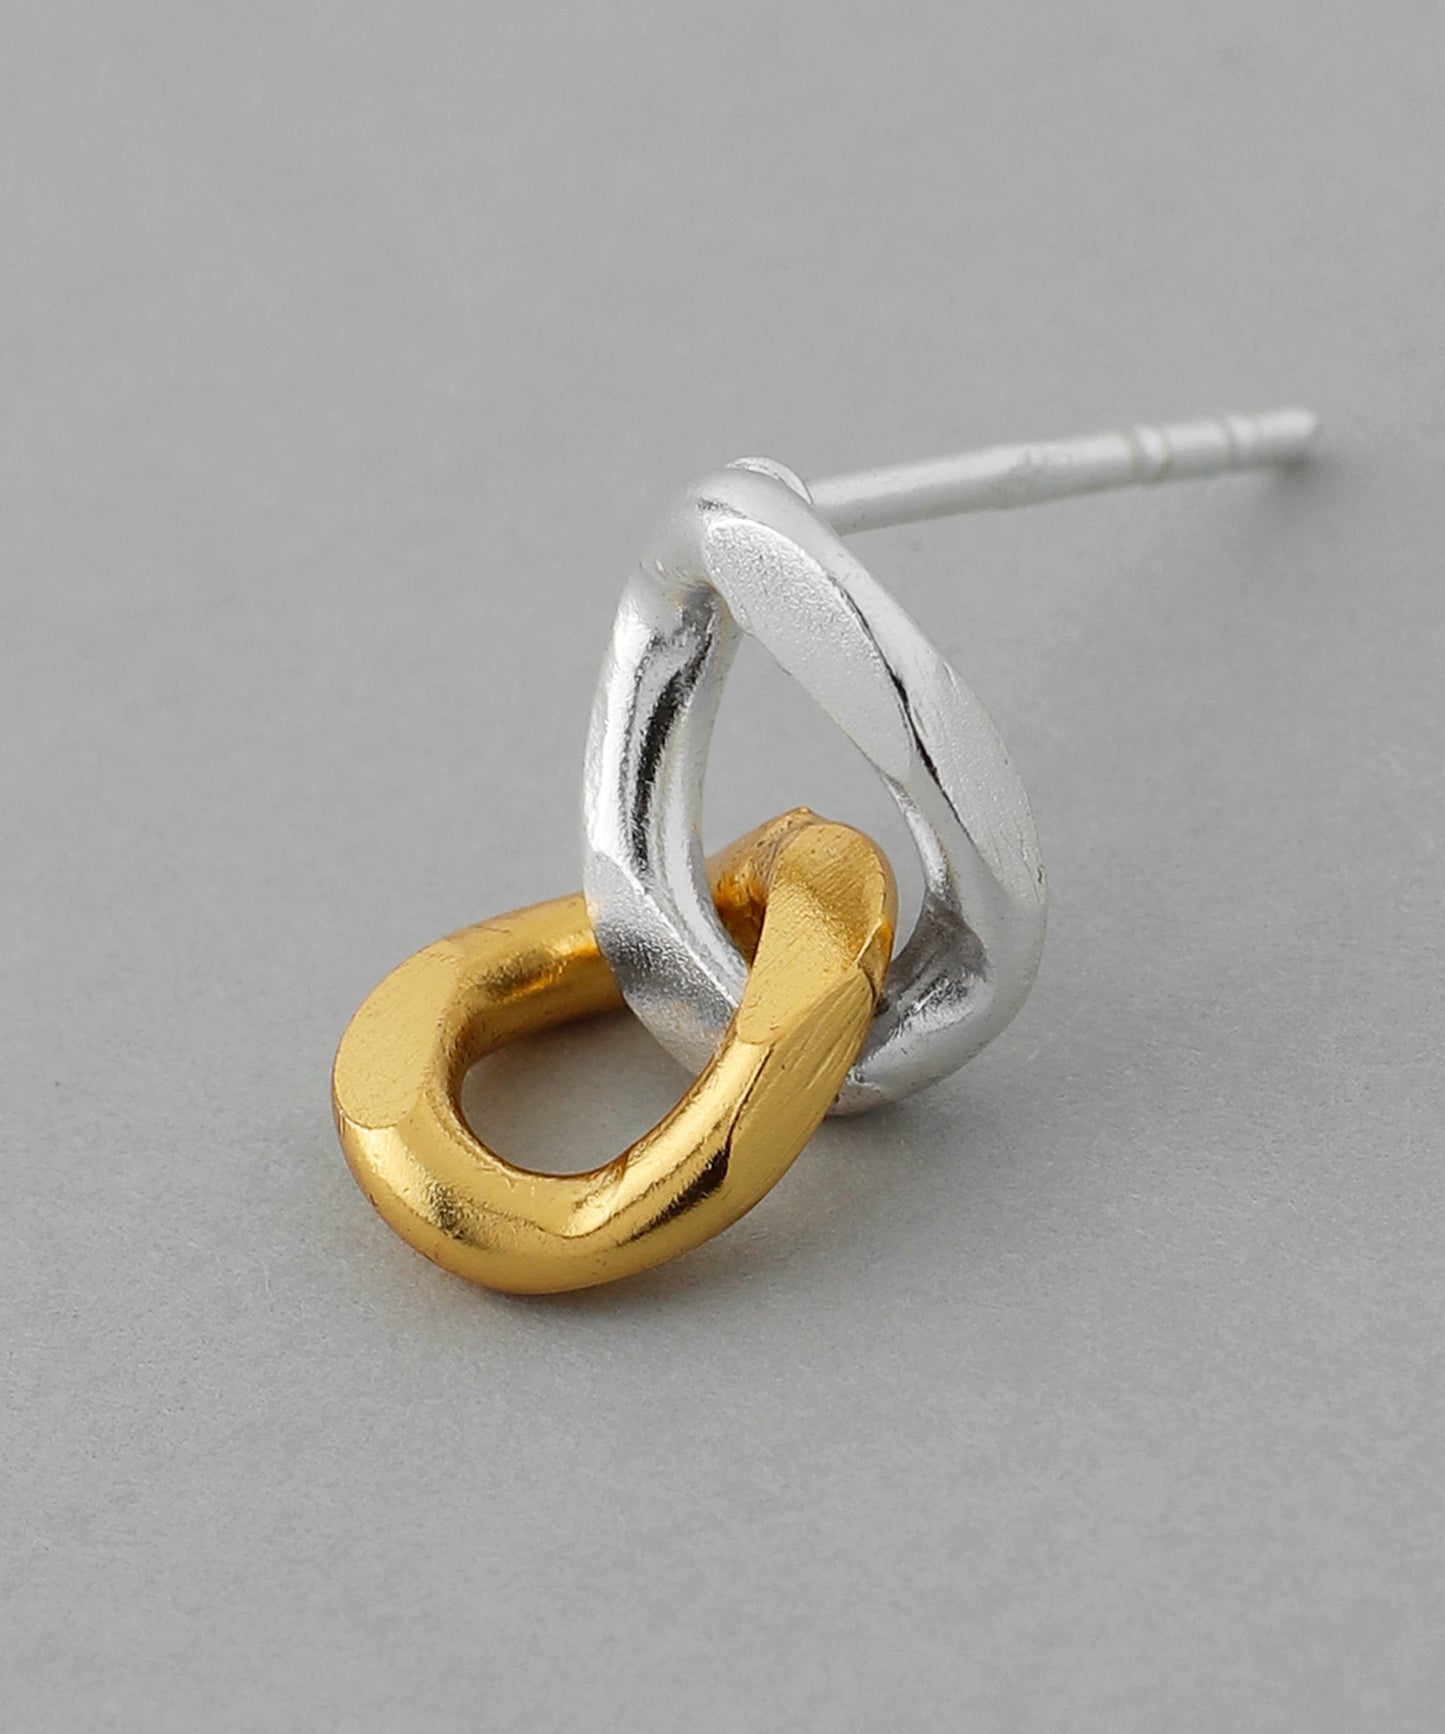 Chain Bicolor Earrings [925 silver][Basic]